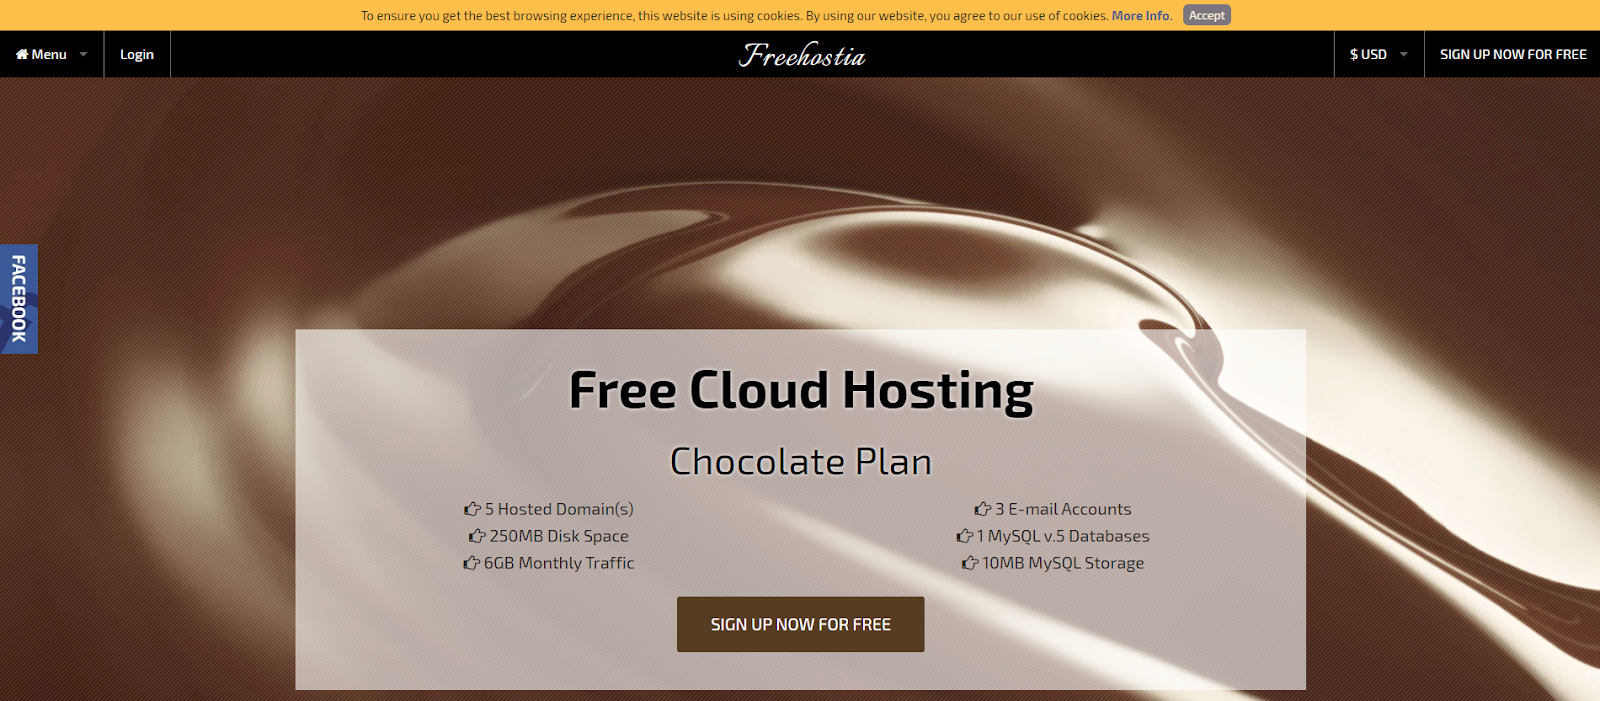 freehostia - best free hosting for wordpress